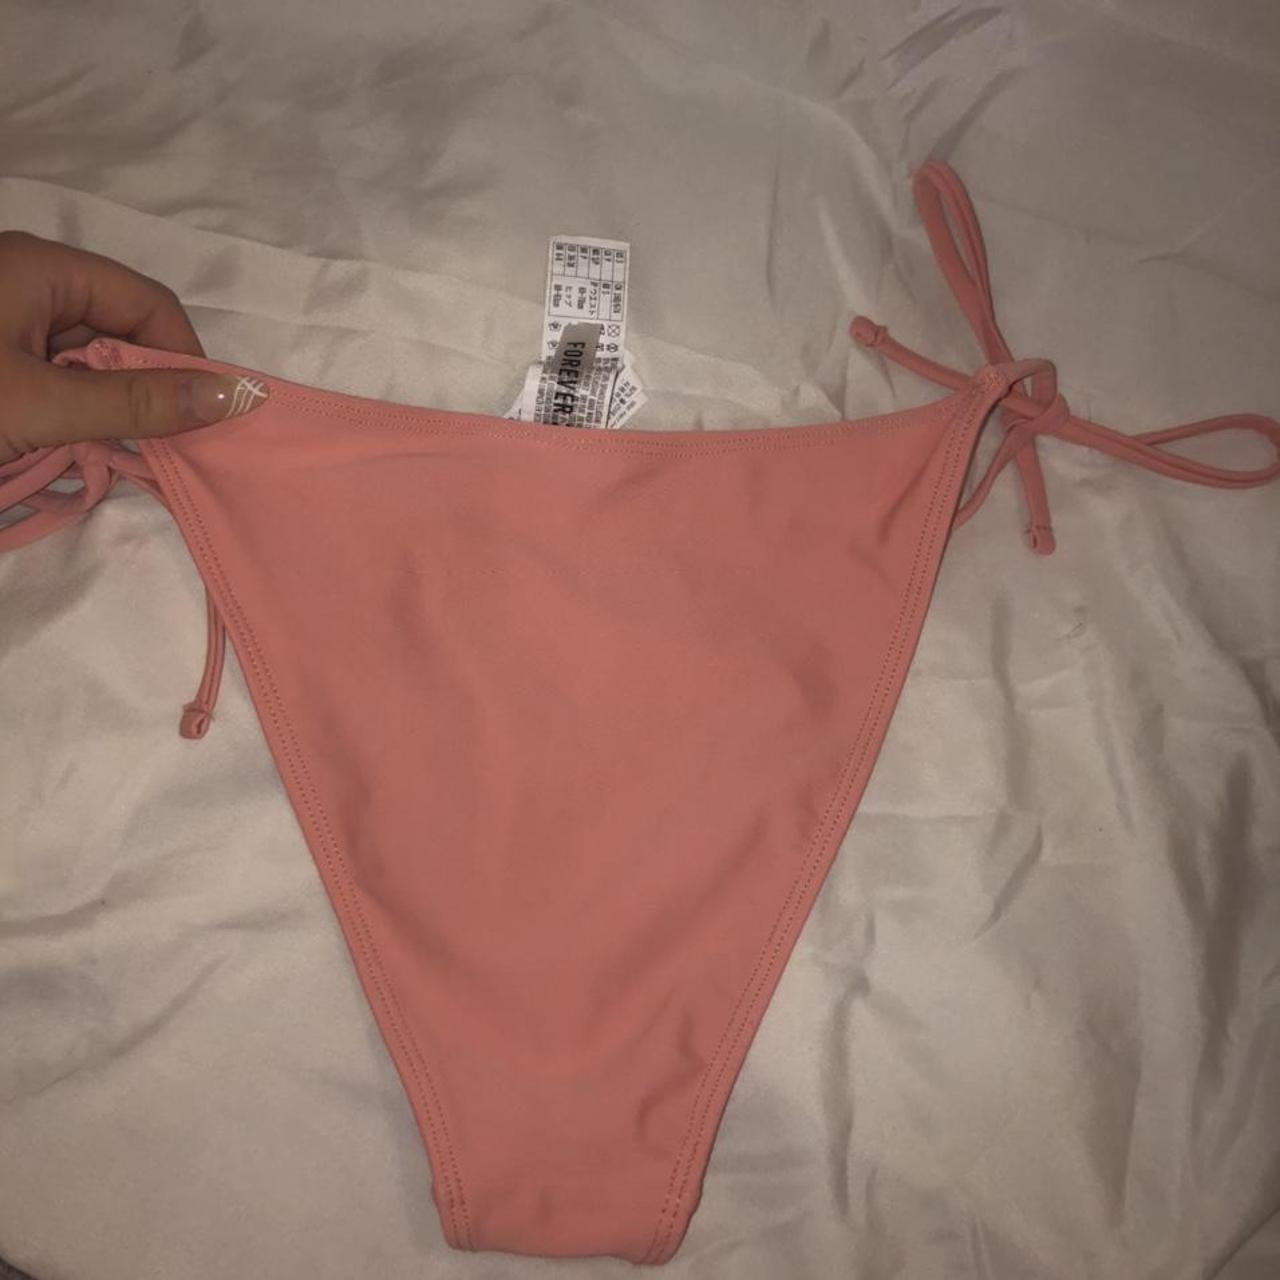 Product Image 3 - bikini bottoms peachish pinkish color,